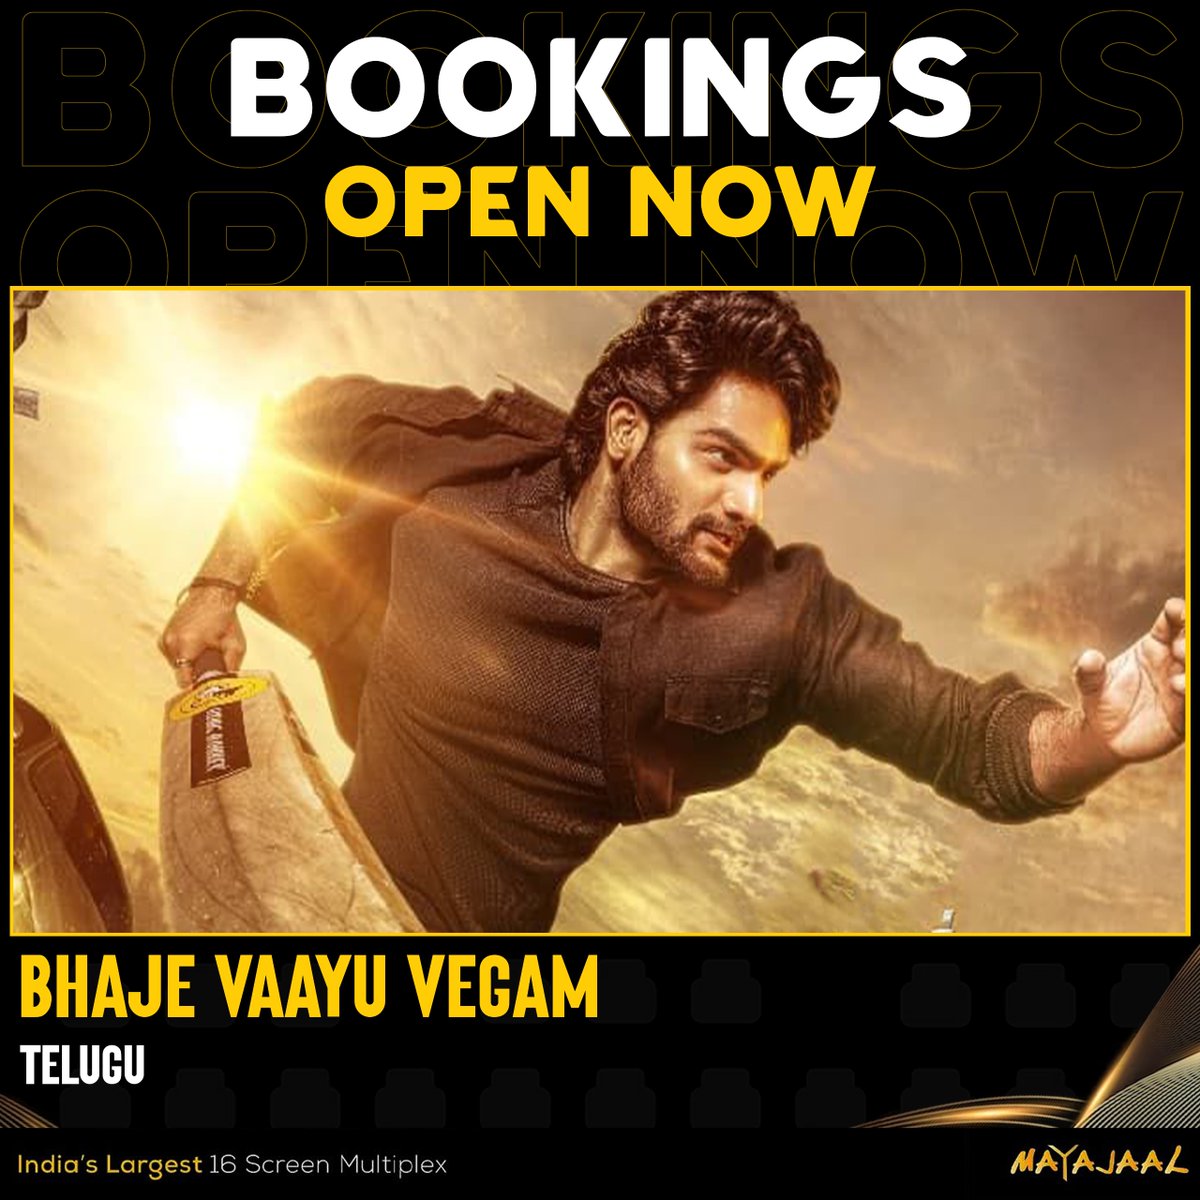 Dive in for the high-stakes drama of #BhajeVaayuVegam! 🔥⚡ Bookings open for #BhajeVaayuVegam (Telugu) at #Mayajaal 🎟️bit.ly/3sVdbqD #BVVonMay31st #Kartikeya #IshwaryaMenon